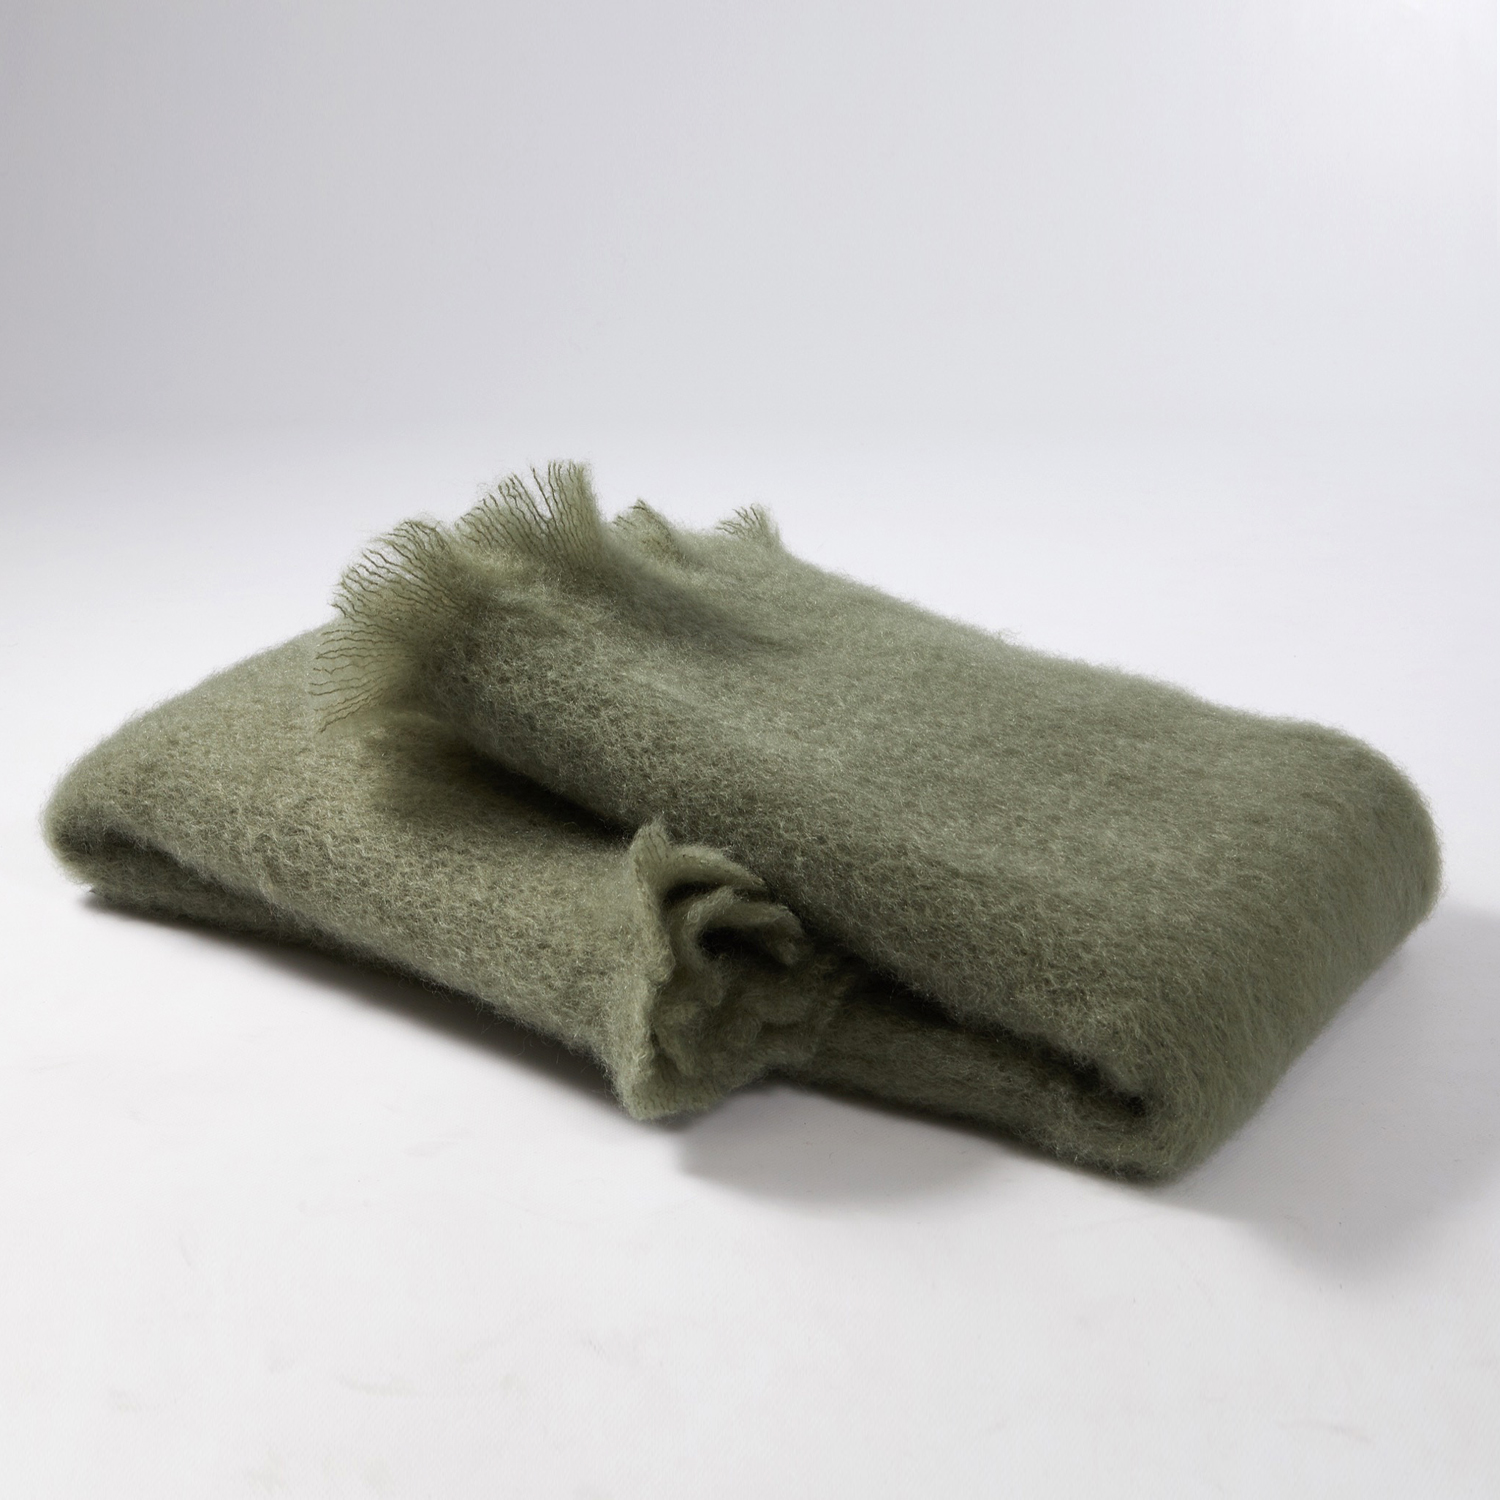 Mantas Ezcaray Lisos Olive Green Mohair Shawl / Throw - 65 x 200 cm